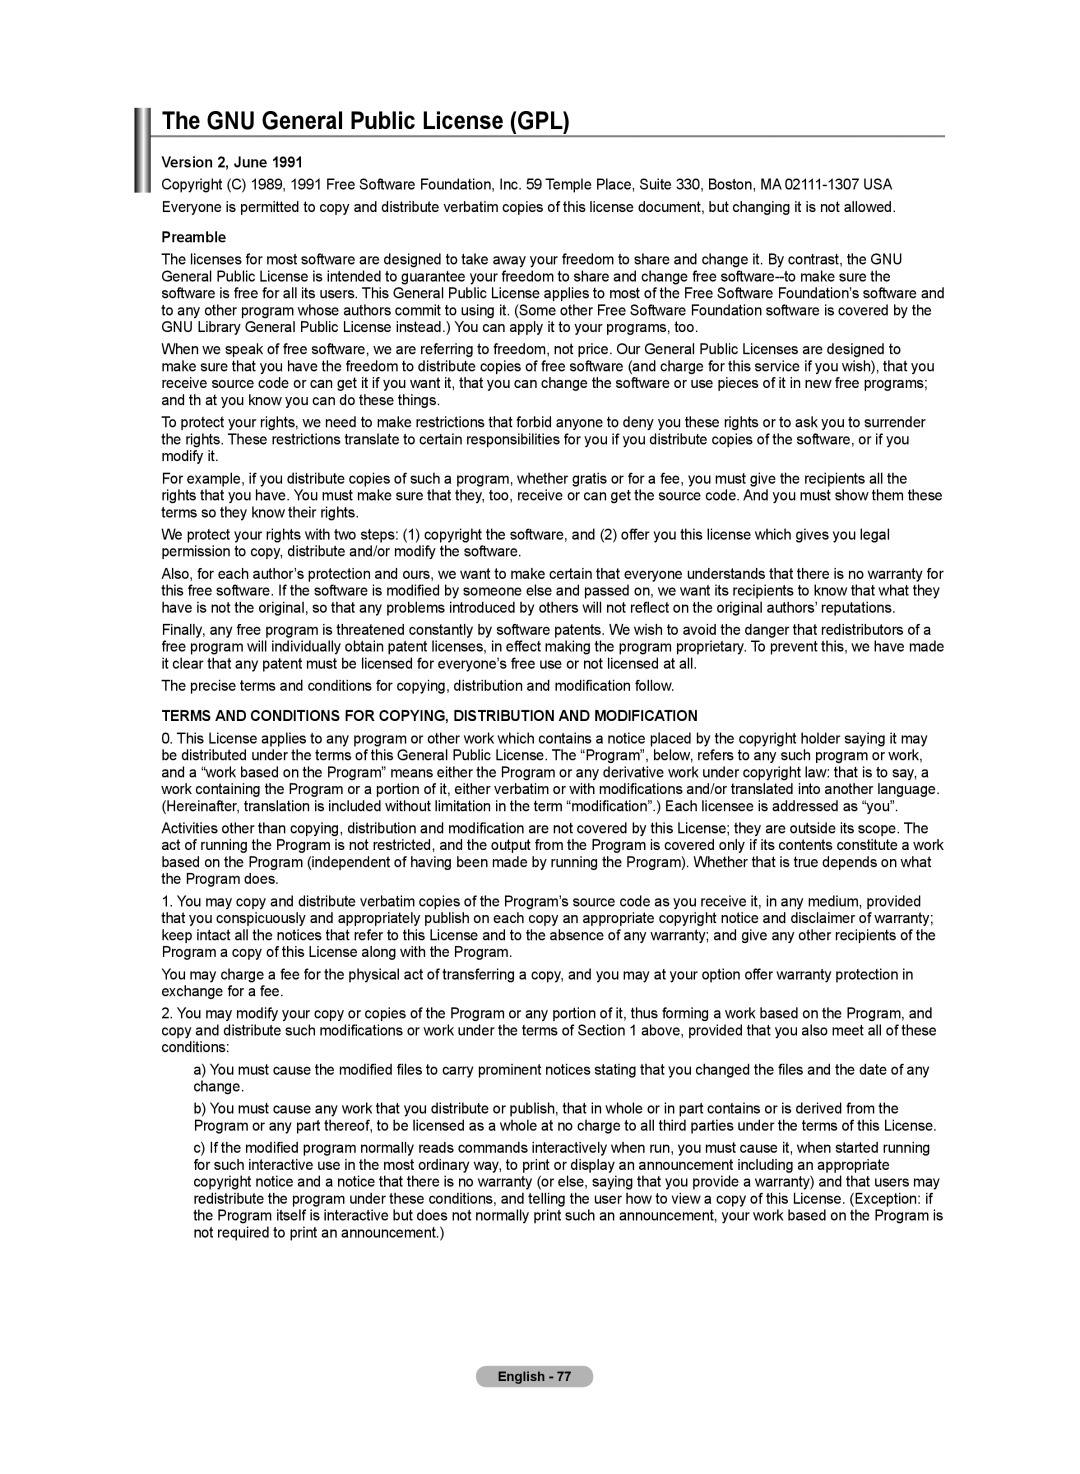 Samsung 510 user manual The GNU General Public License GPL, Version 2, June, Preamble 